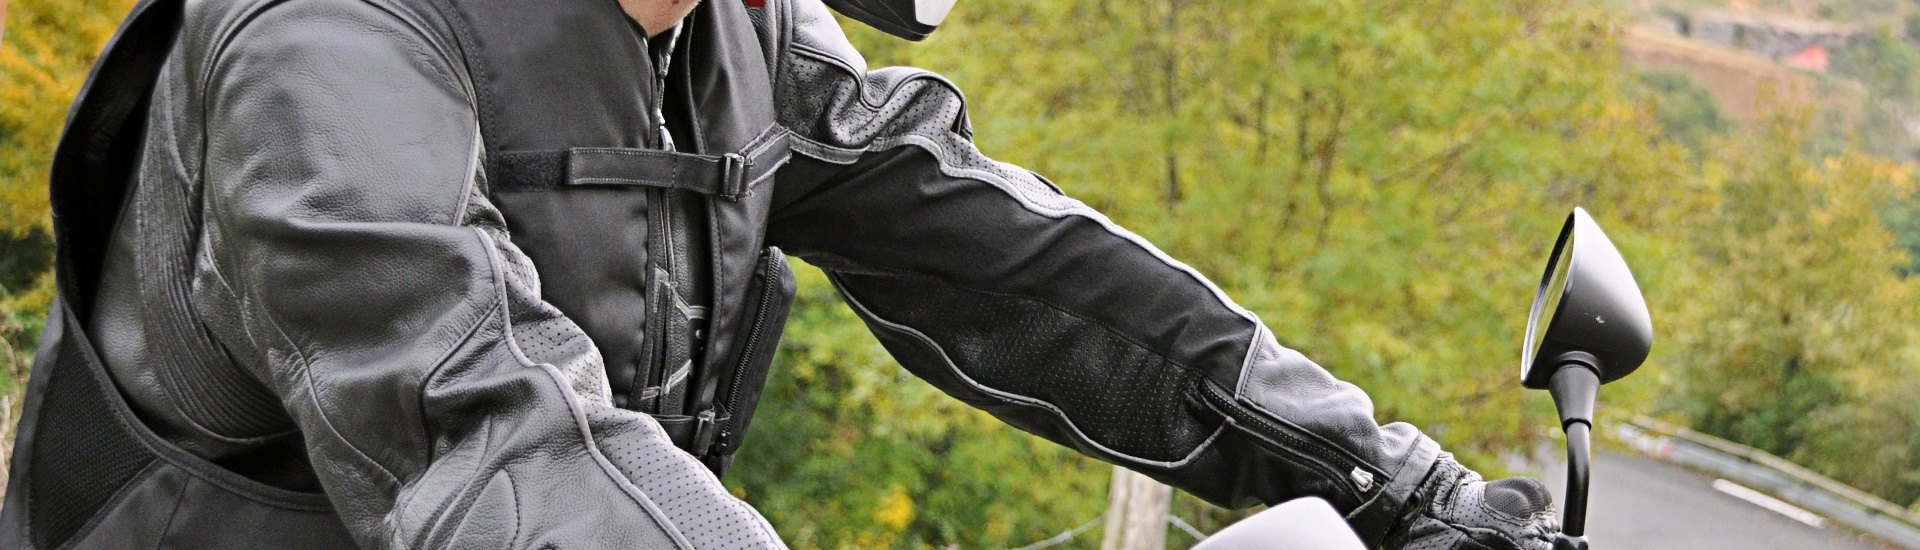 Amazon.com: HELITE Unisex-Adult Adventure Motorcycle Airbag Jacket (Black,  6X-Large) : Automotive